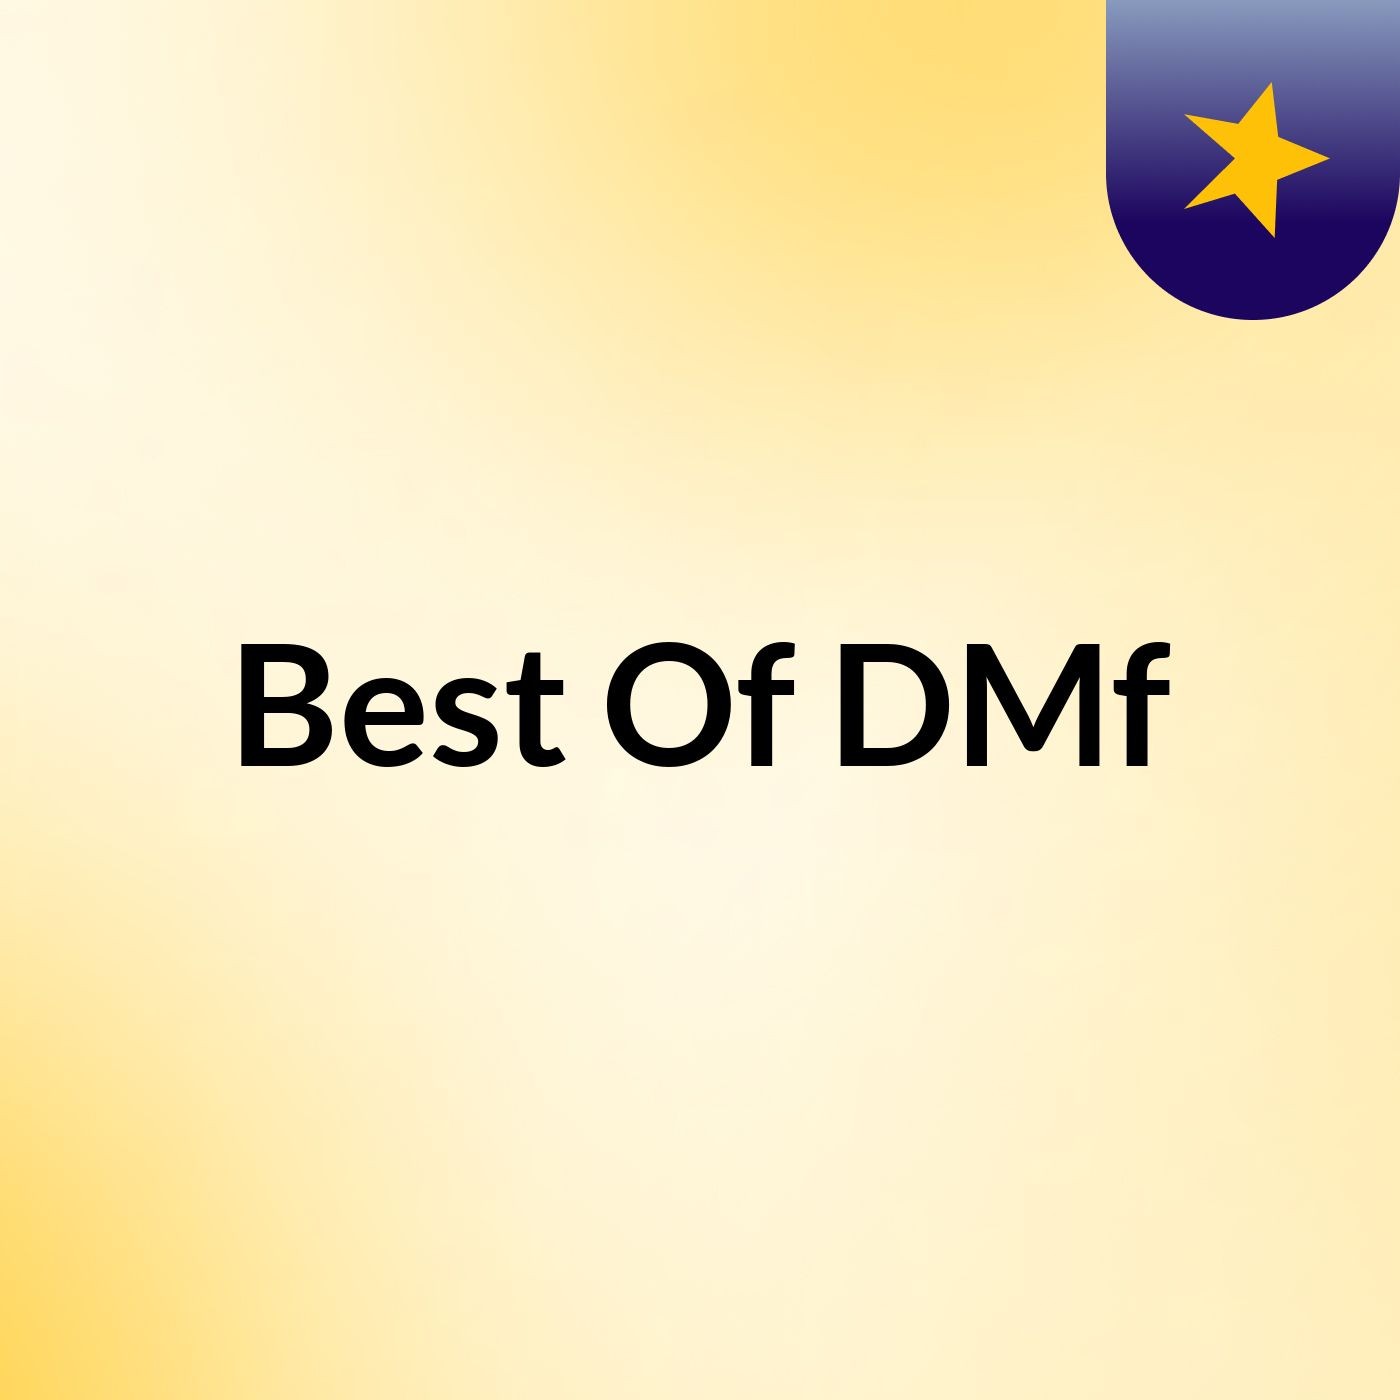 Best Of DMf